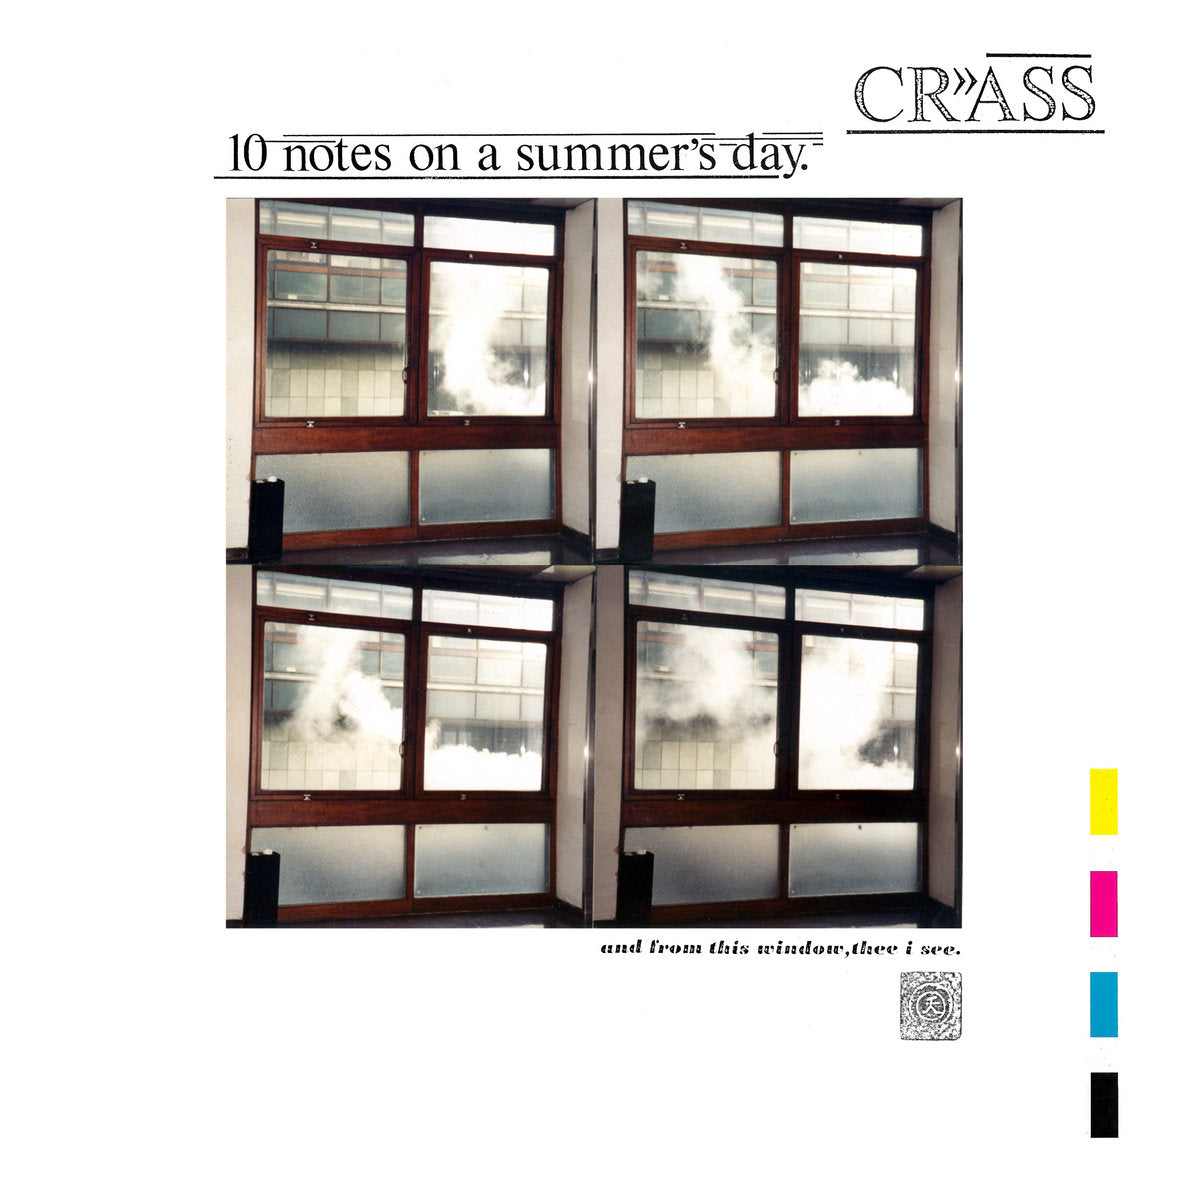 CRASS - 10 NOTES ON A SUMMER'S DAY Vinyl LP